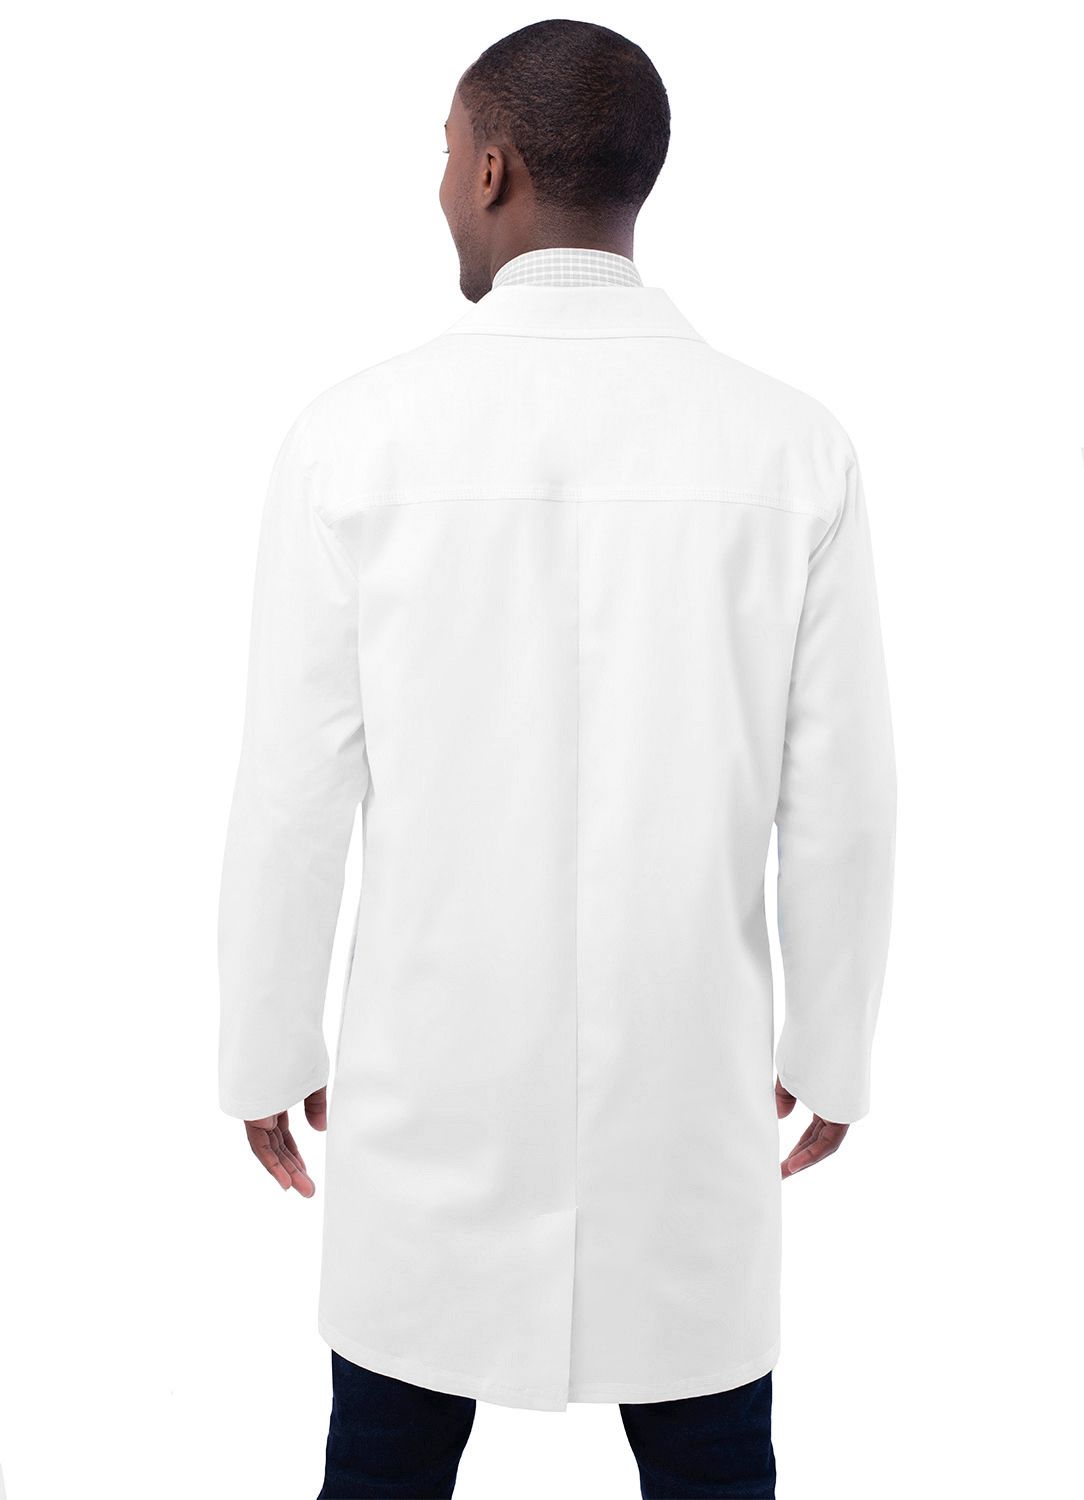 Unisex 36" Snap Front Lab Coat by Adar XXS-3XL / White